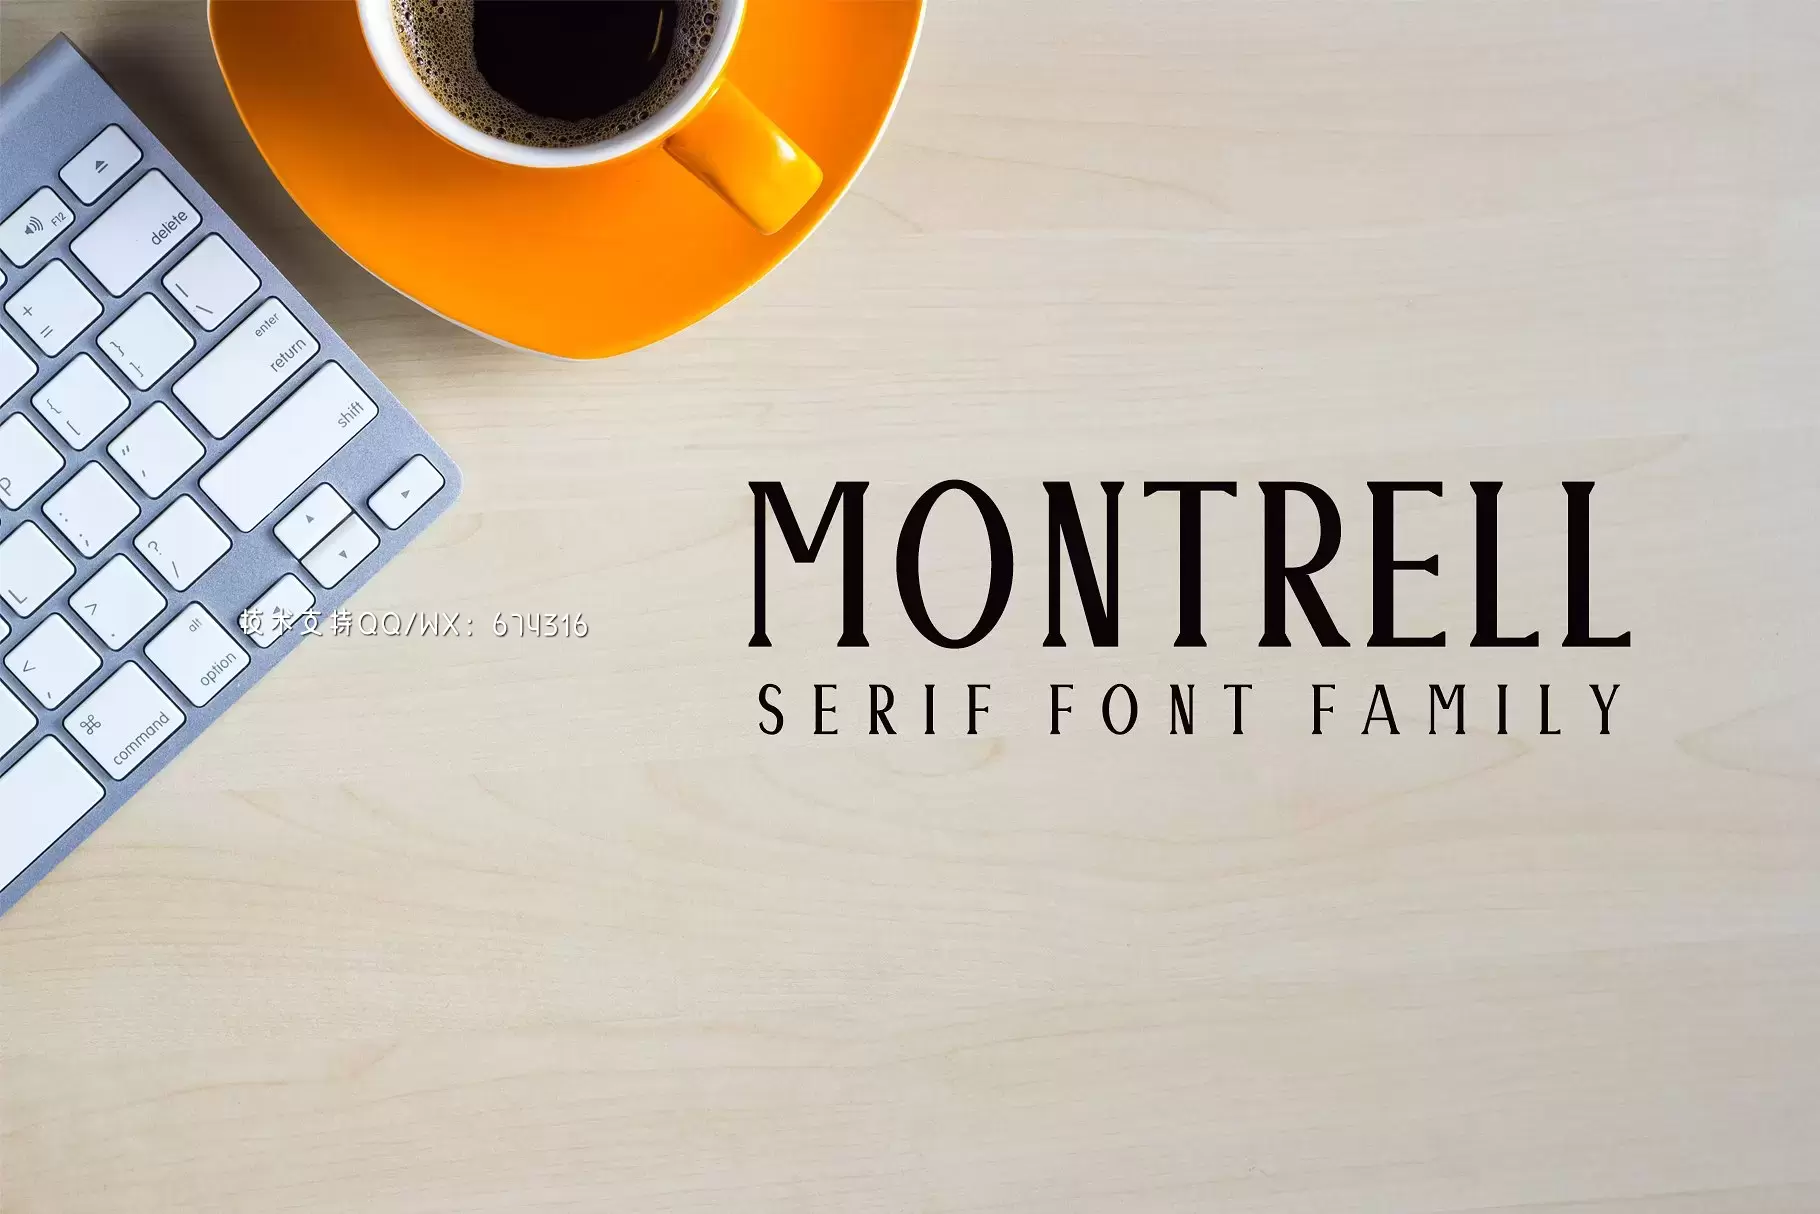 复古设计字体 Montrell Serif 5 Font Family Pack免费下载